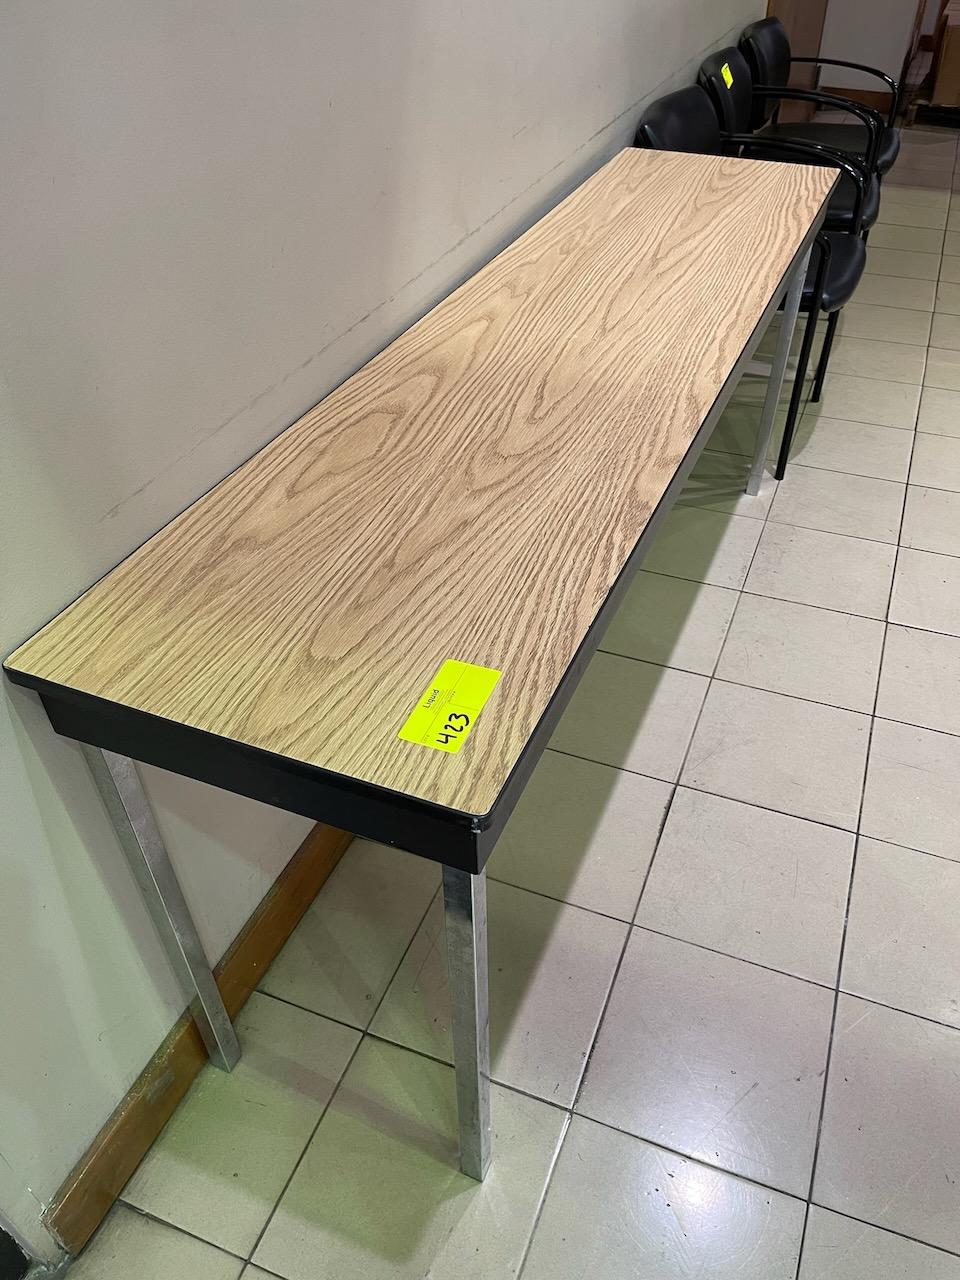 (6) Folding Tables - Wood Finish 29" x 60" x 18" (HxWxD)